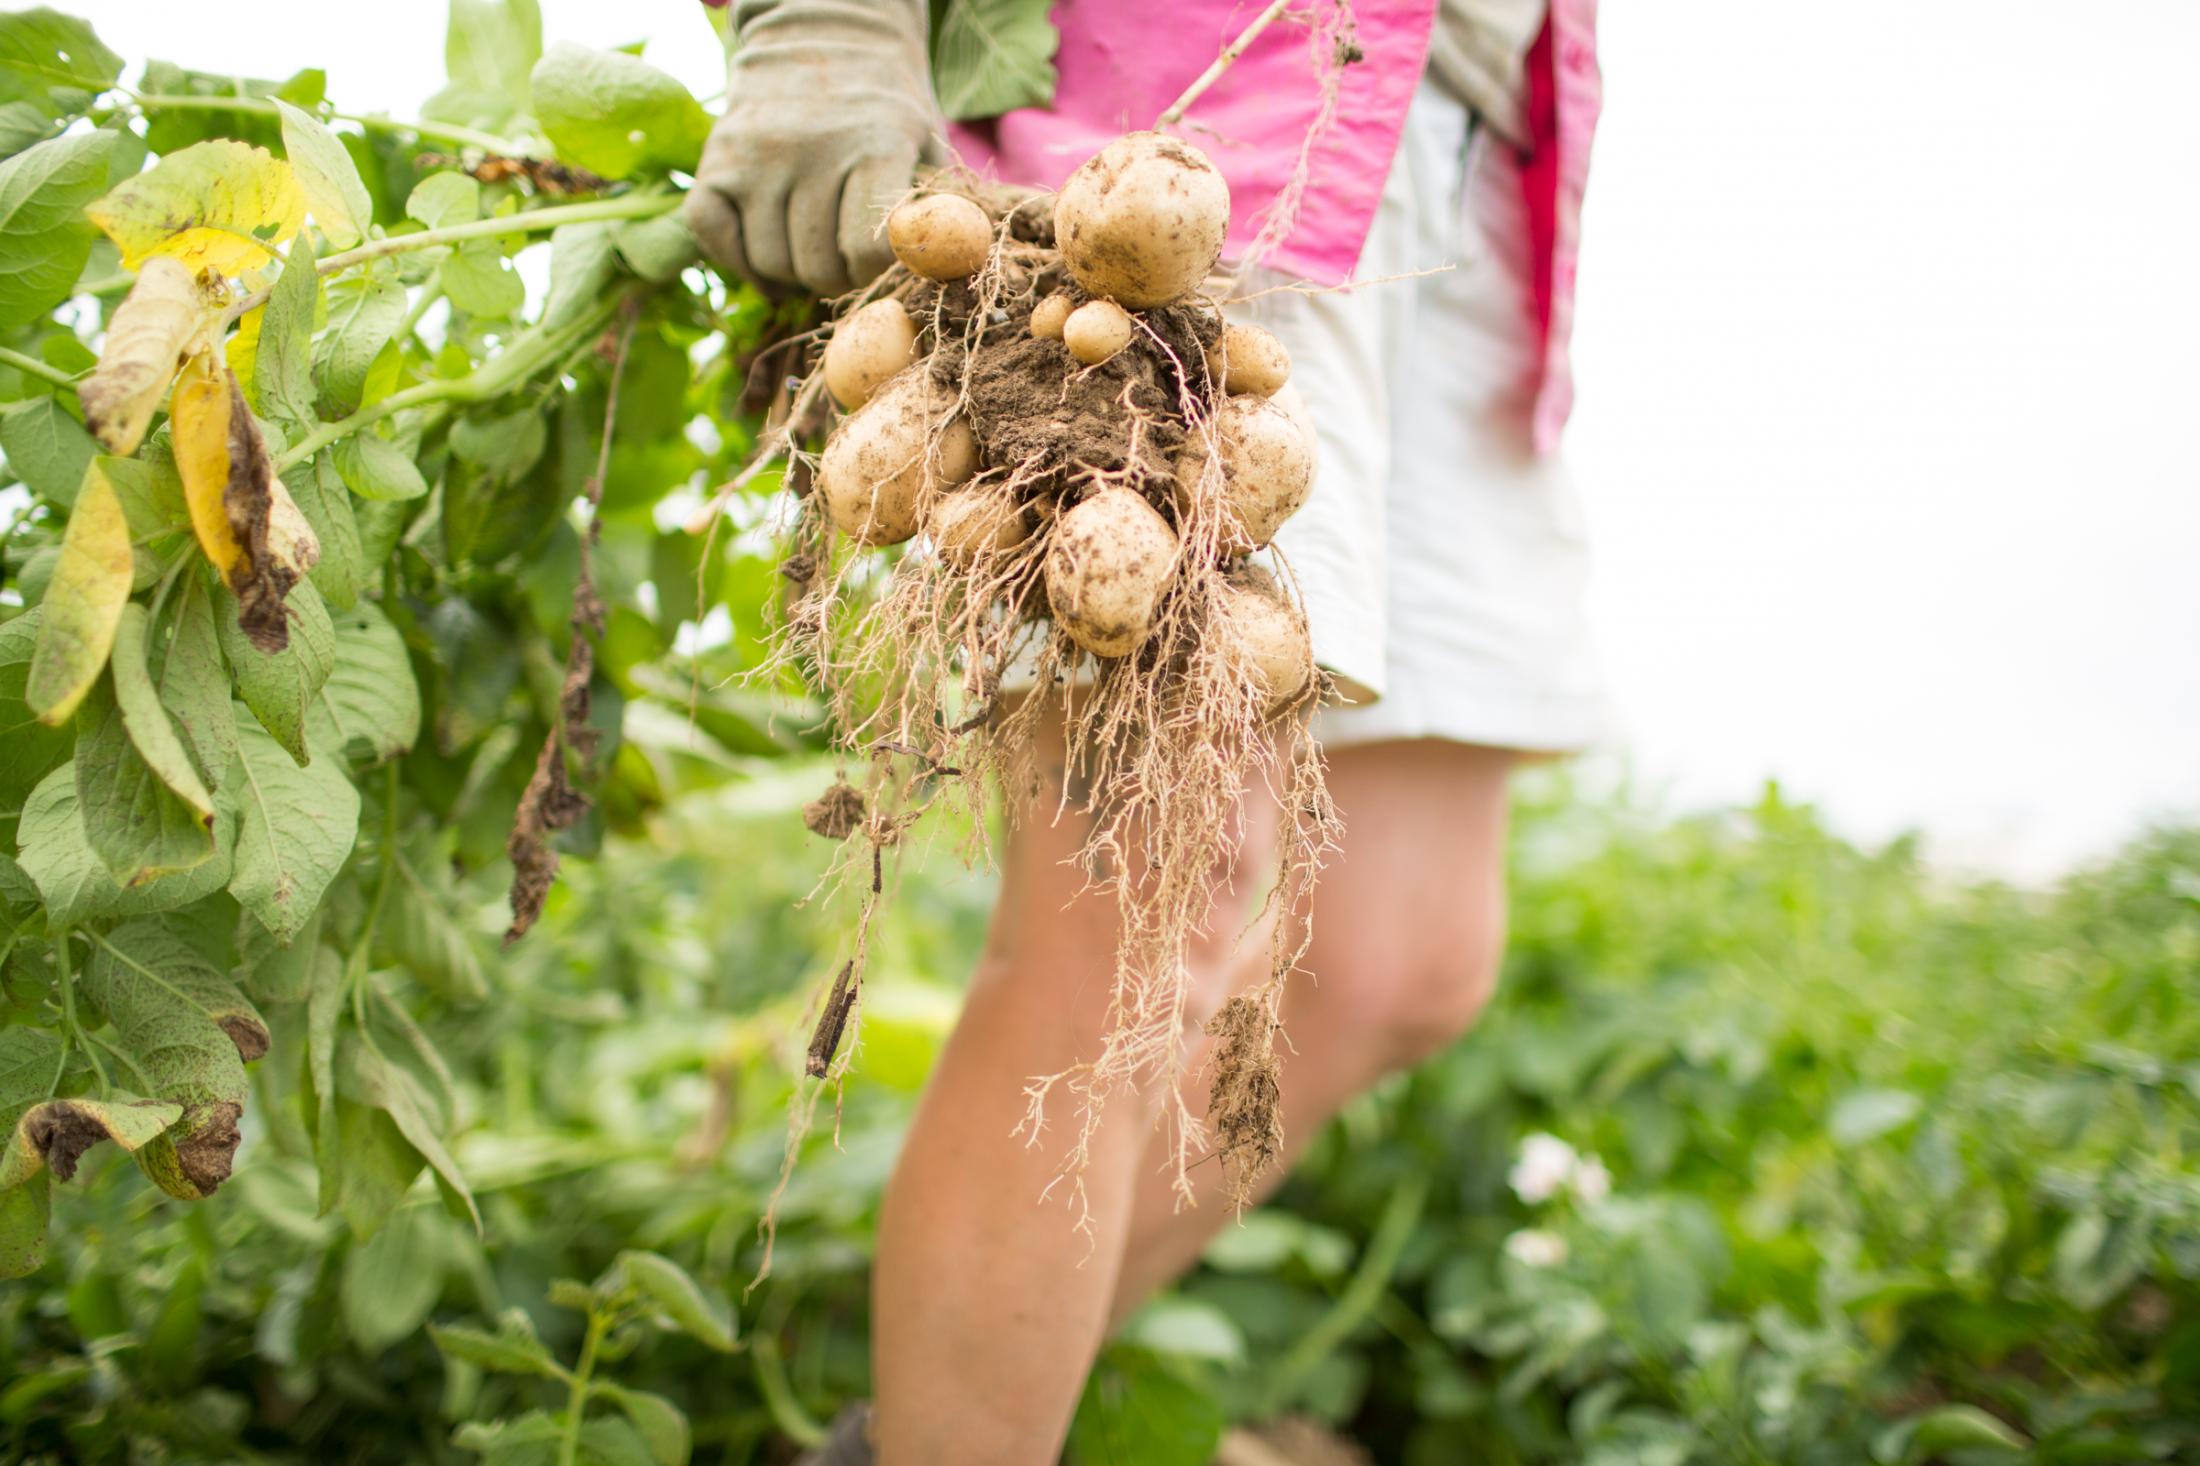 Oh, Farmer - Potato farmer, Marilee Foster harvests potatoes on her...